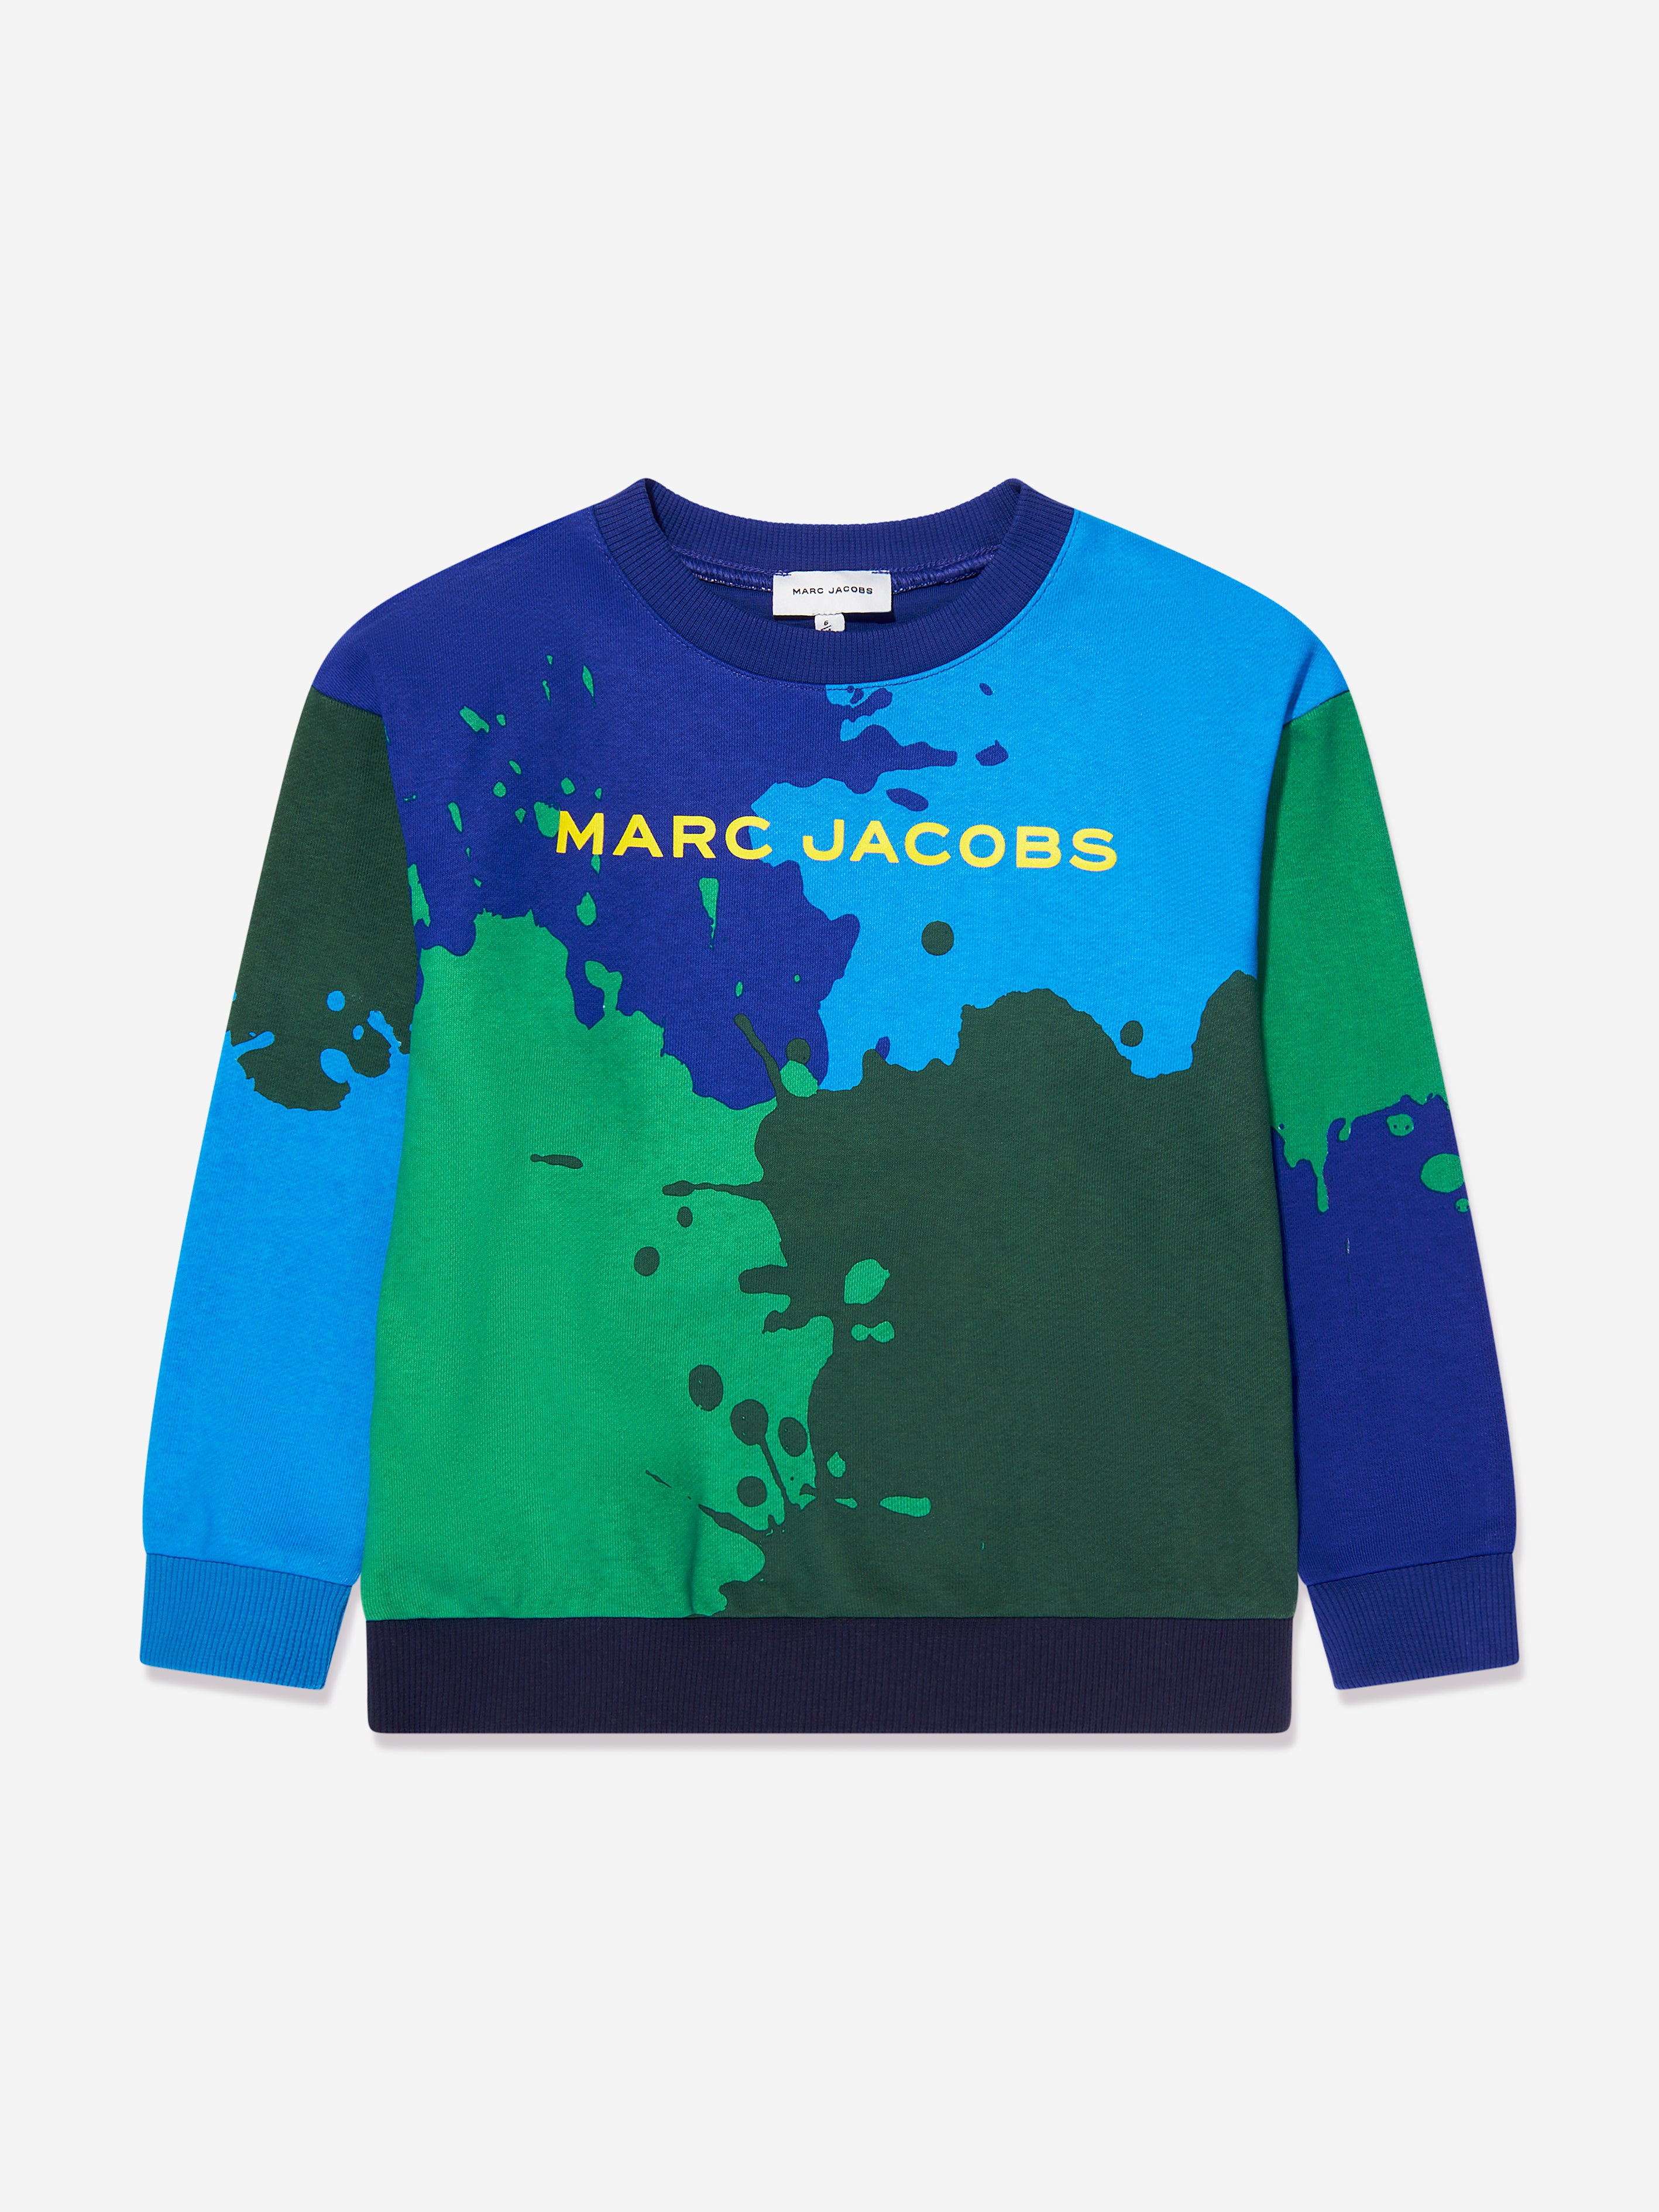 MARC JACOBS 男の子のカラーブロックスウェットシャツは青